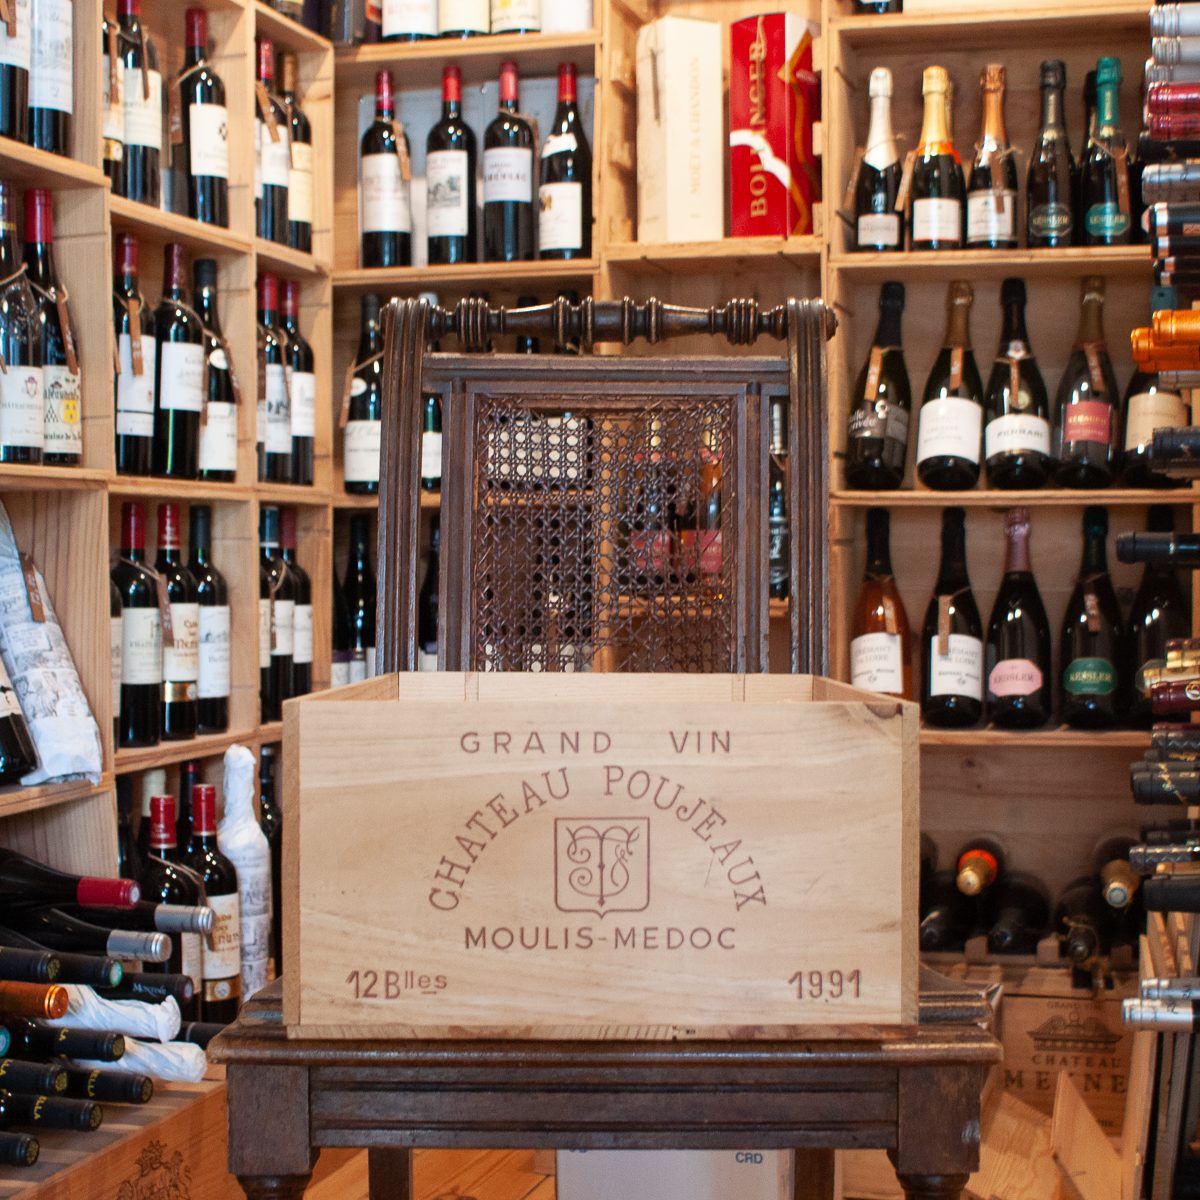 Original wine wooden case for 12 bottles from Château Poujeaux 1991